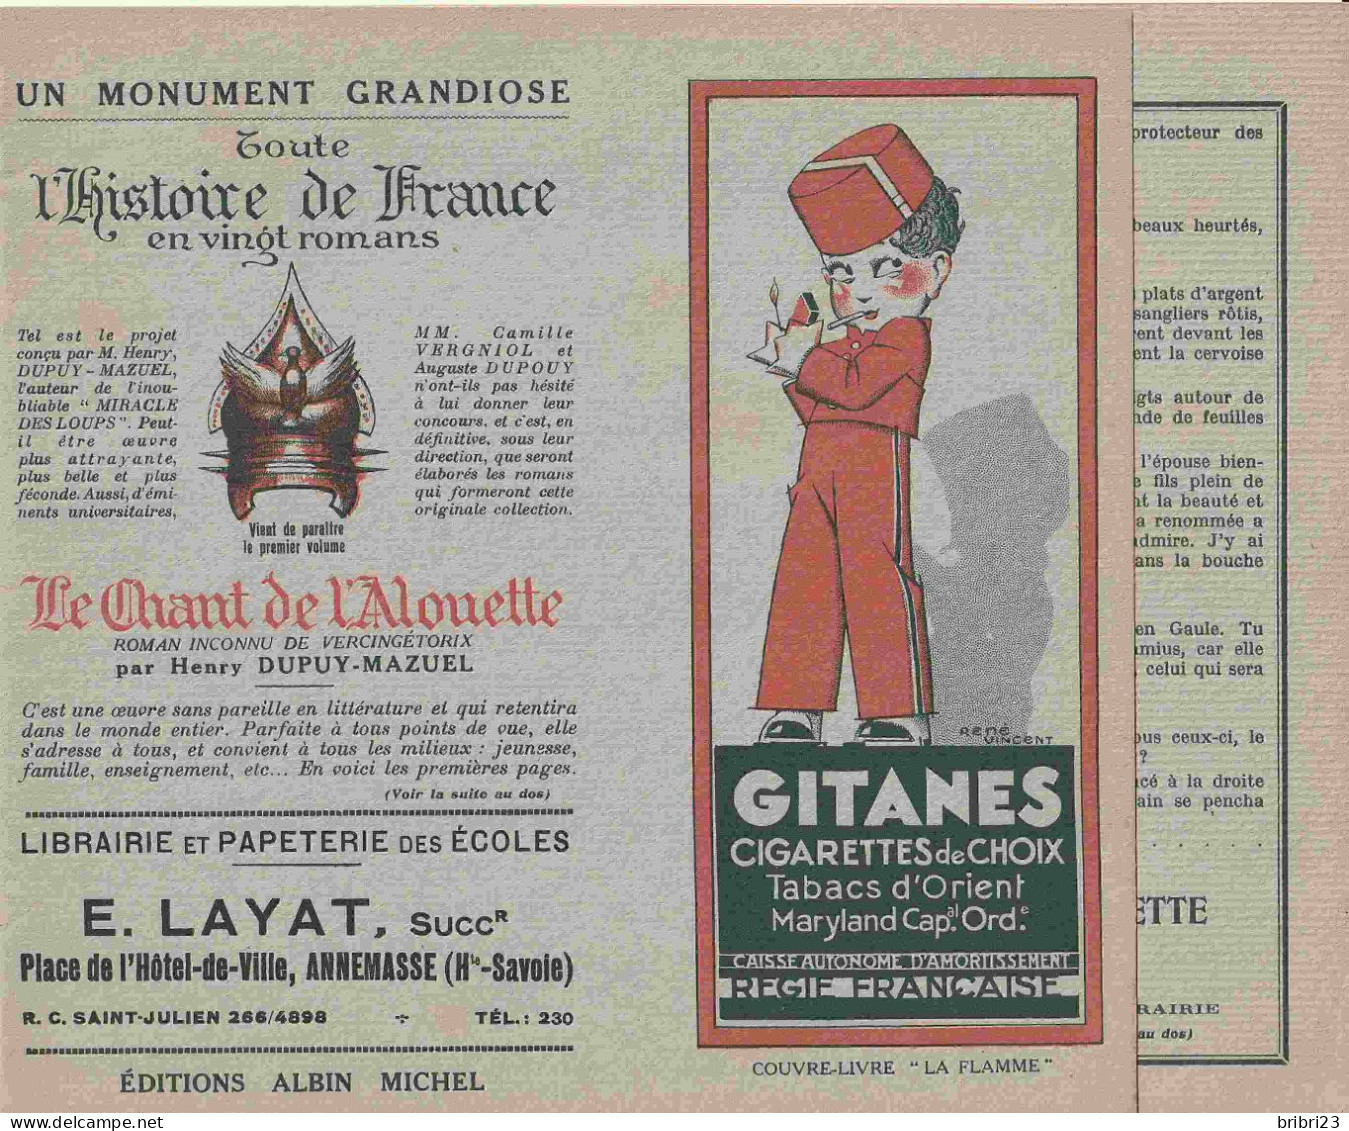 COUVRE-LIVRE " LA FLAMME " PUBLICITE LIBRAIRIE Annemasse - CIGARETTES GITANES BALTO - Tabacco & Sigarette